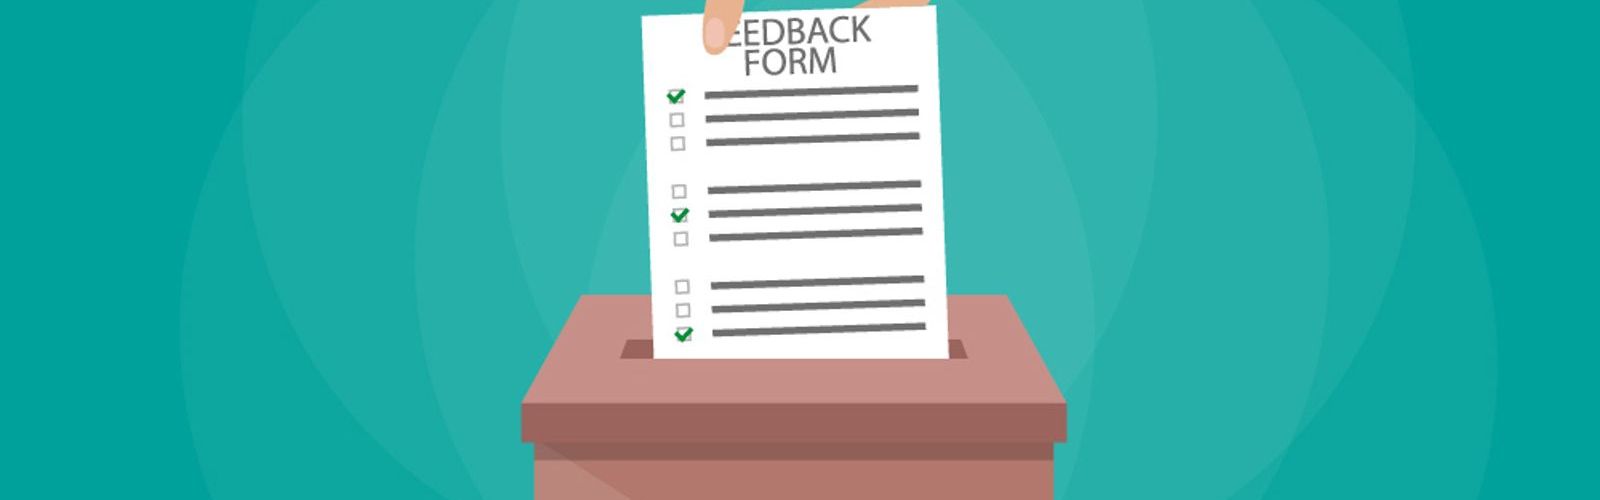 hand submitting feedback form - illustration - website feedback (bigstock 135462440)_web.jpg